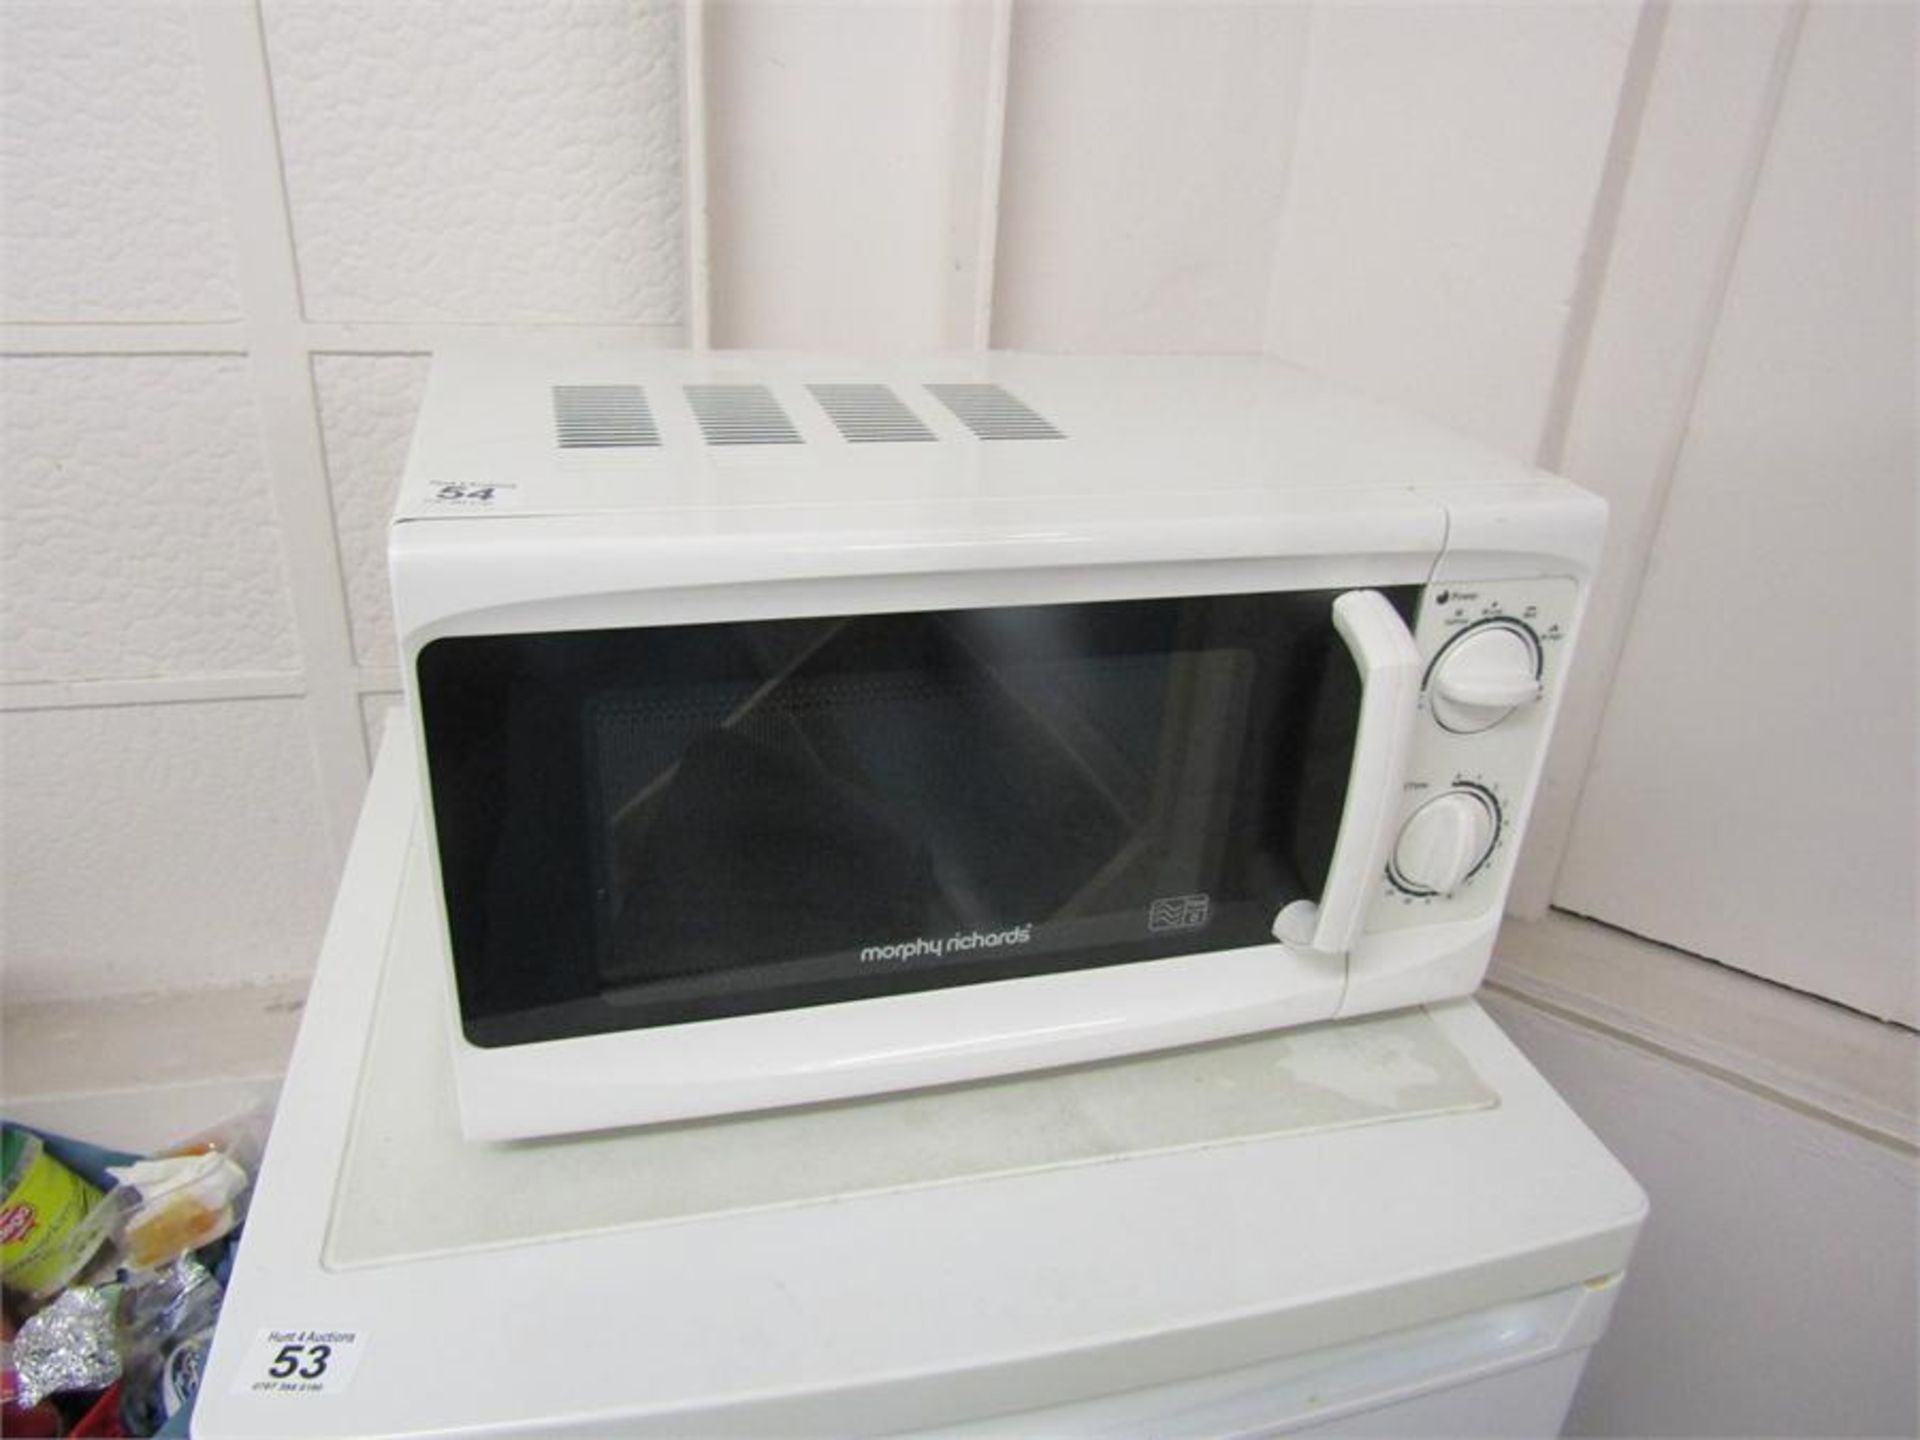 2 Microwave Ovens - good order